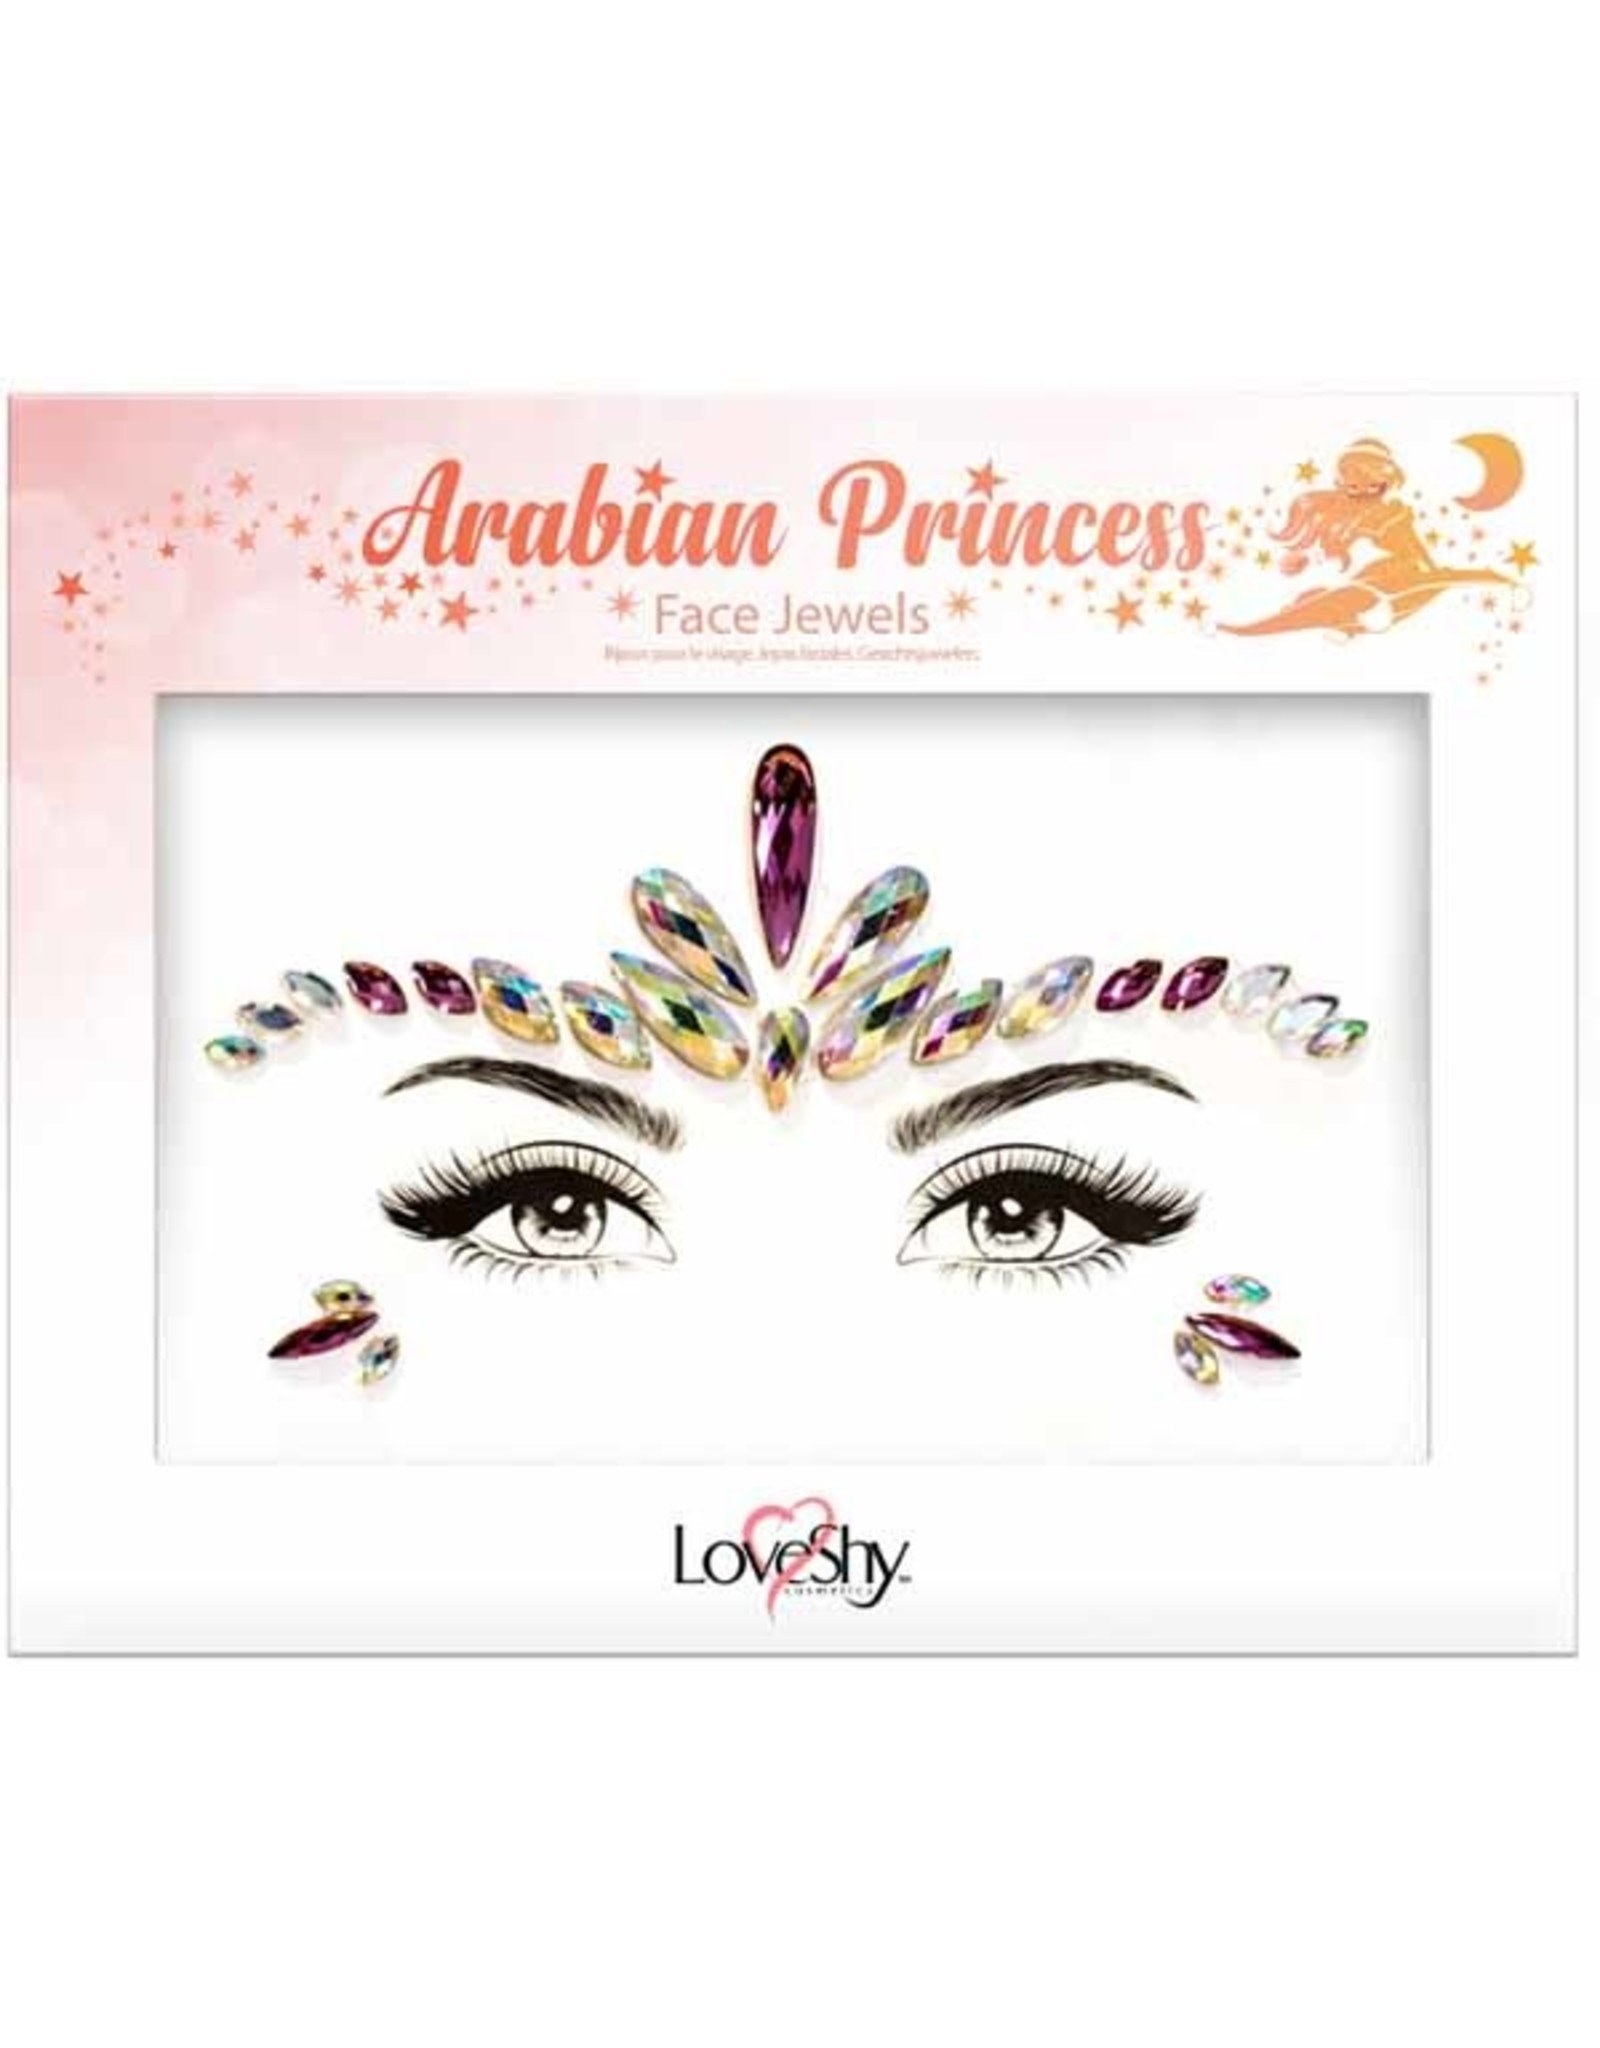 LoveShy Cosmetics Arabian Princess Face Jewels